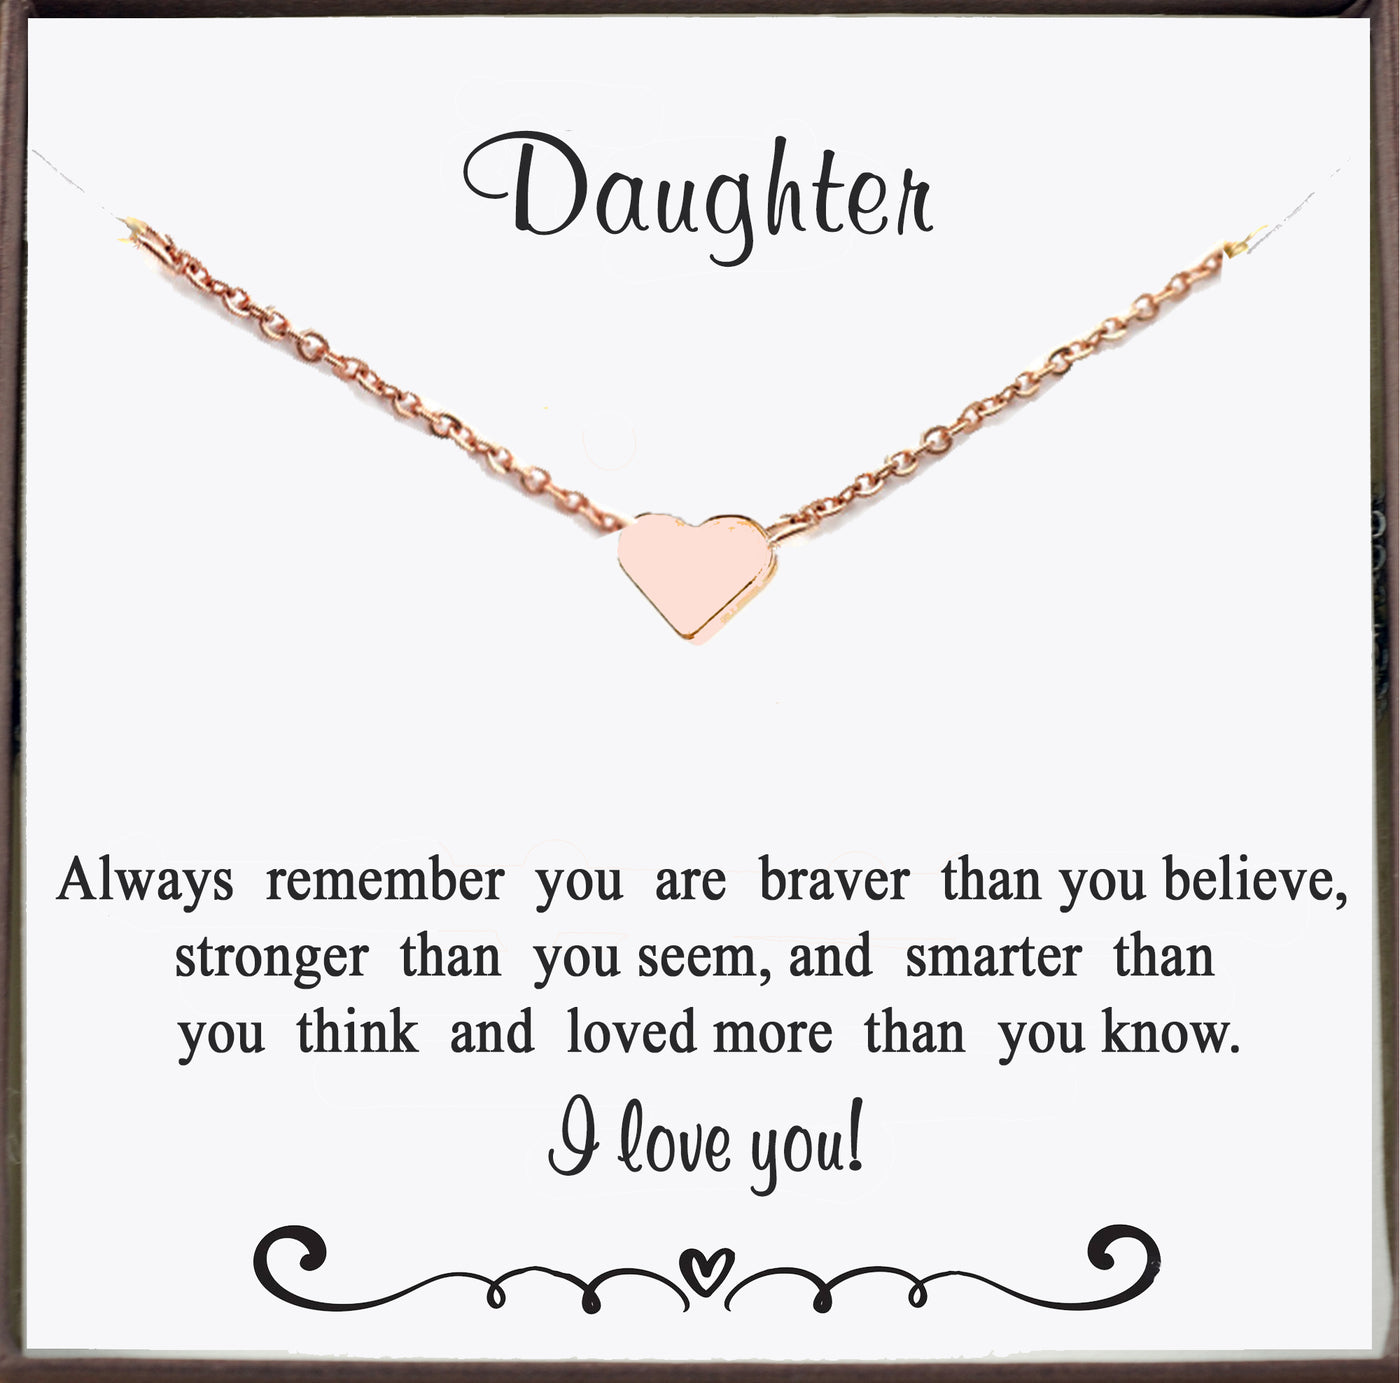 Rose Gold Heart Necklace for Daughter - Godfullness